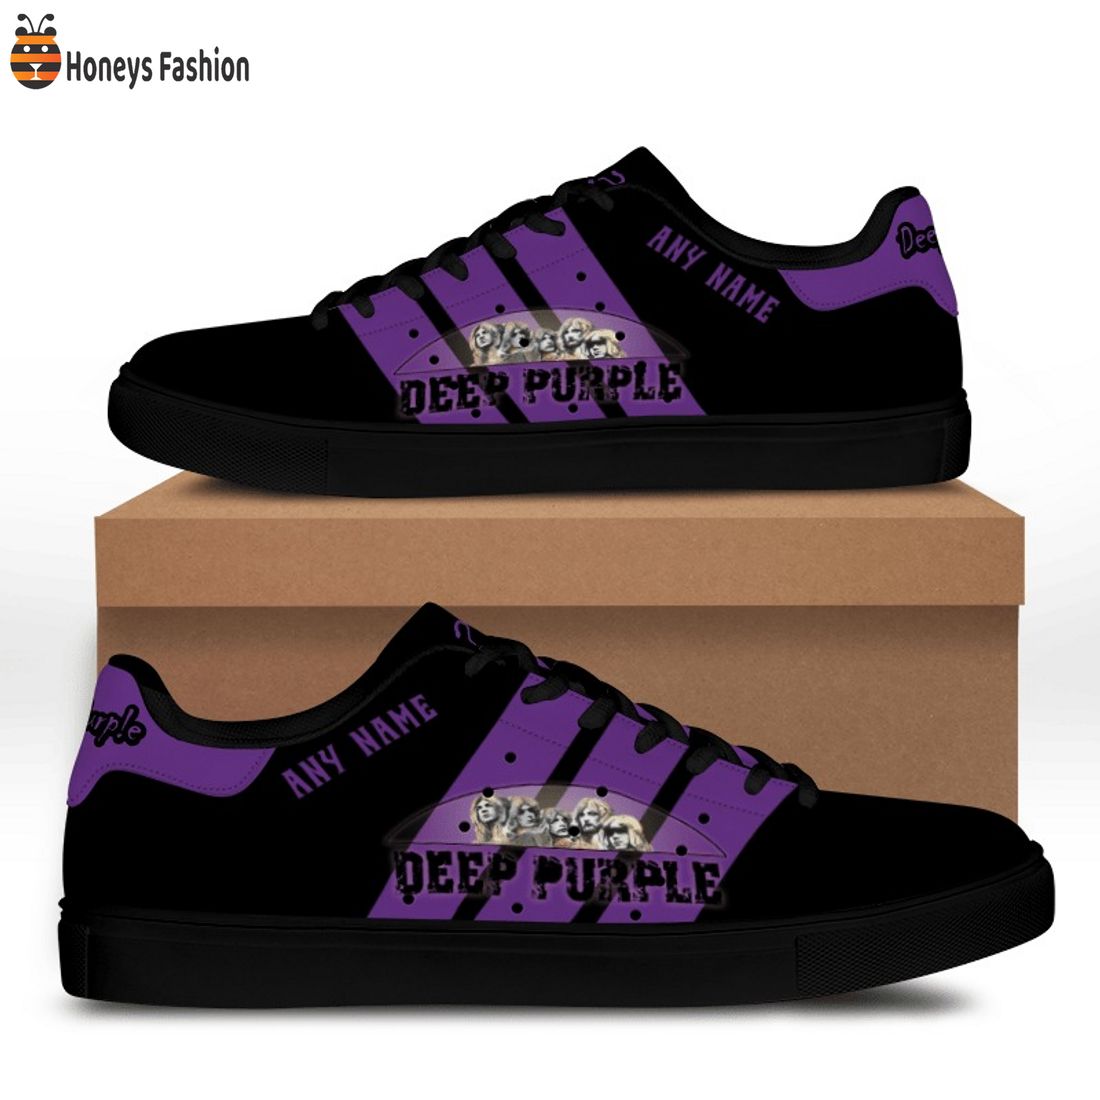 Deep Purple custom name ver 2 stan smith adidas shoes